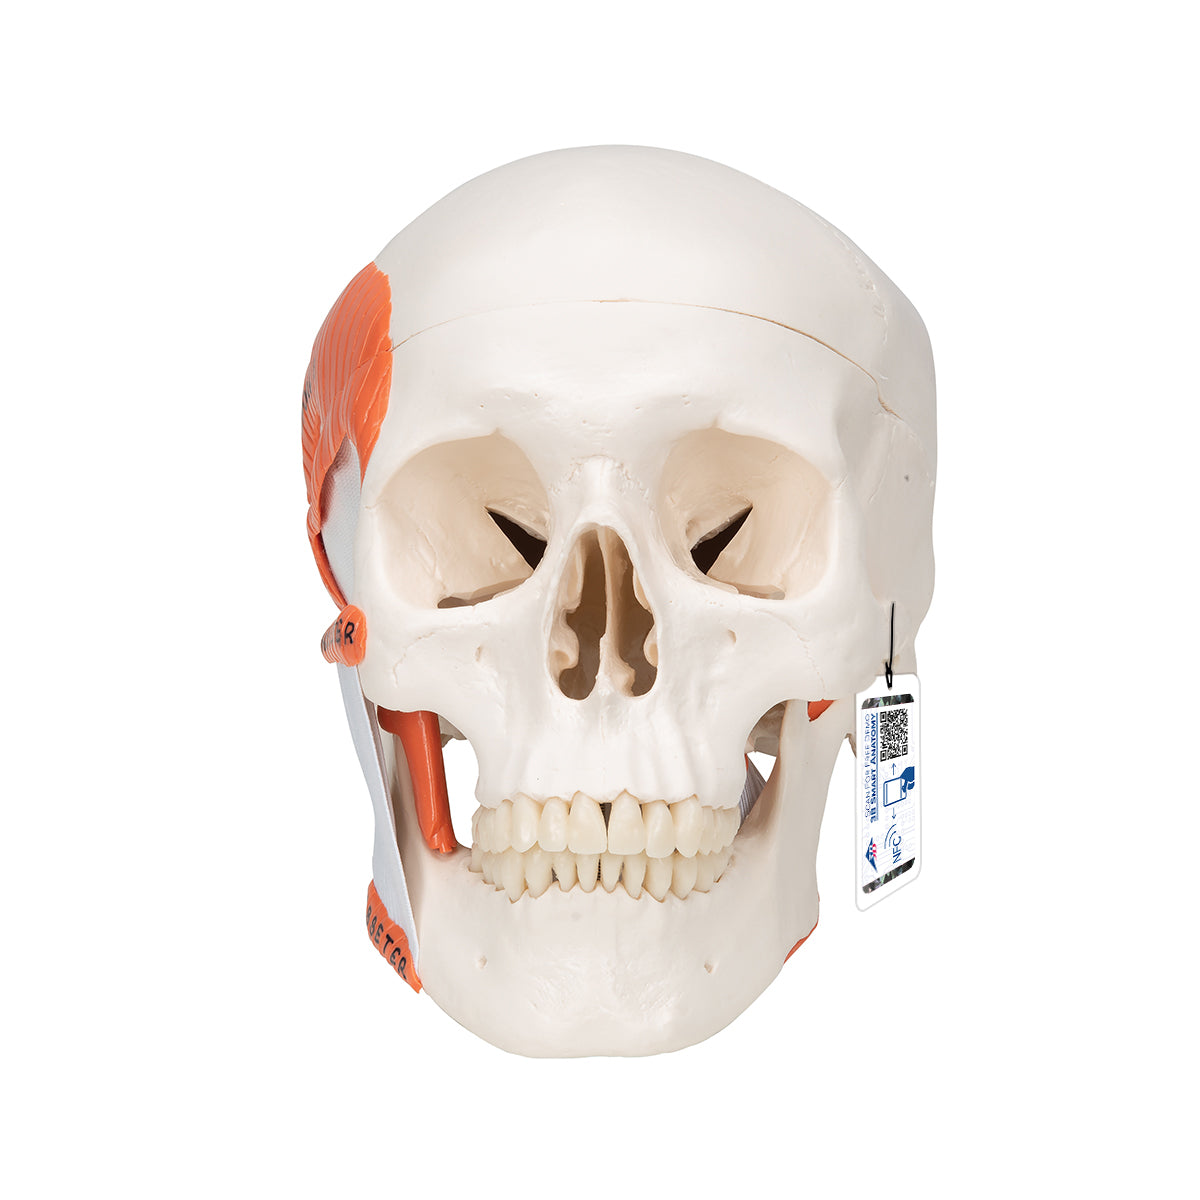 TMJ Human Skull Model, Demonstrates Functions of Masticator Muscles, 2 part